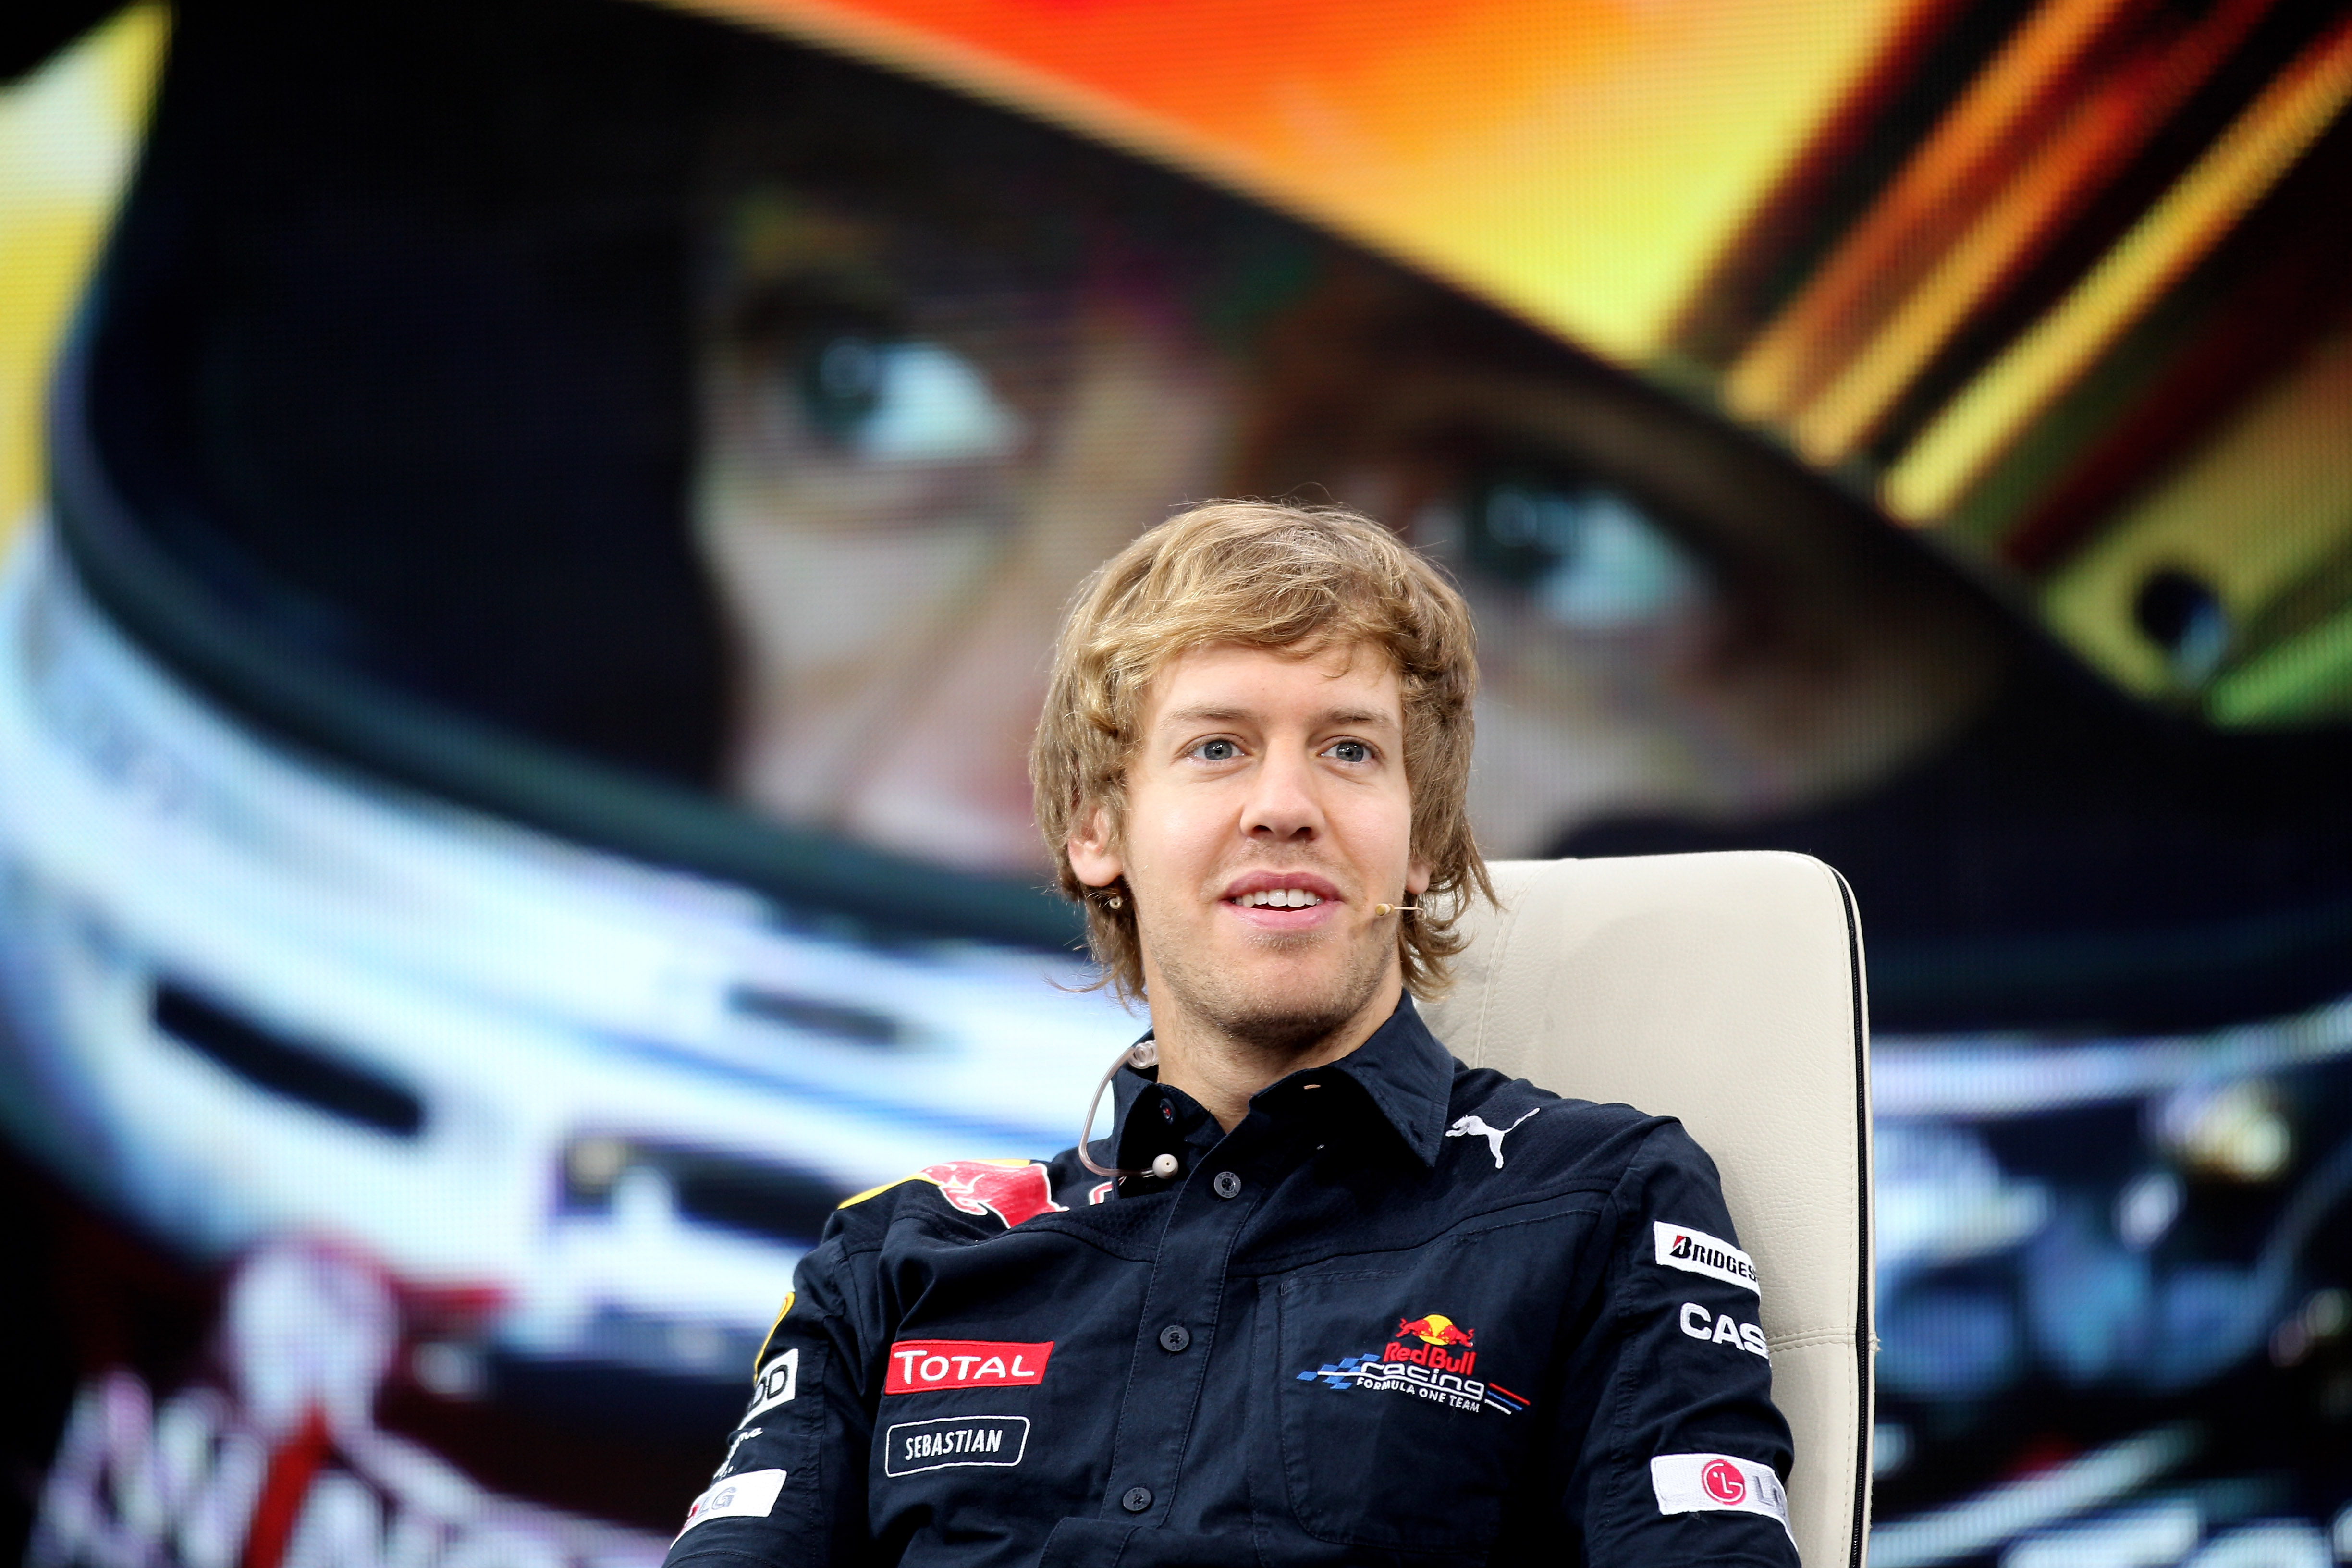 2010 World Champion: Sebastian Vettel